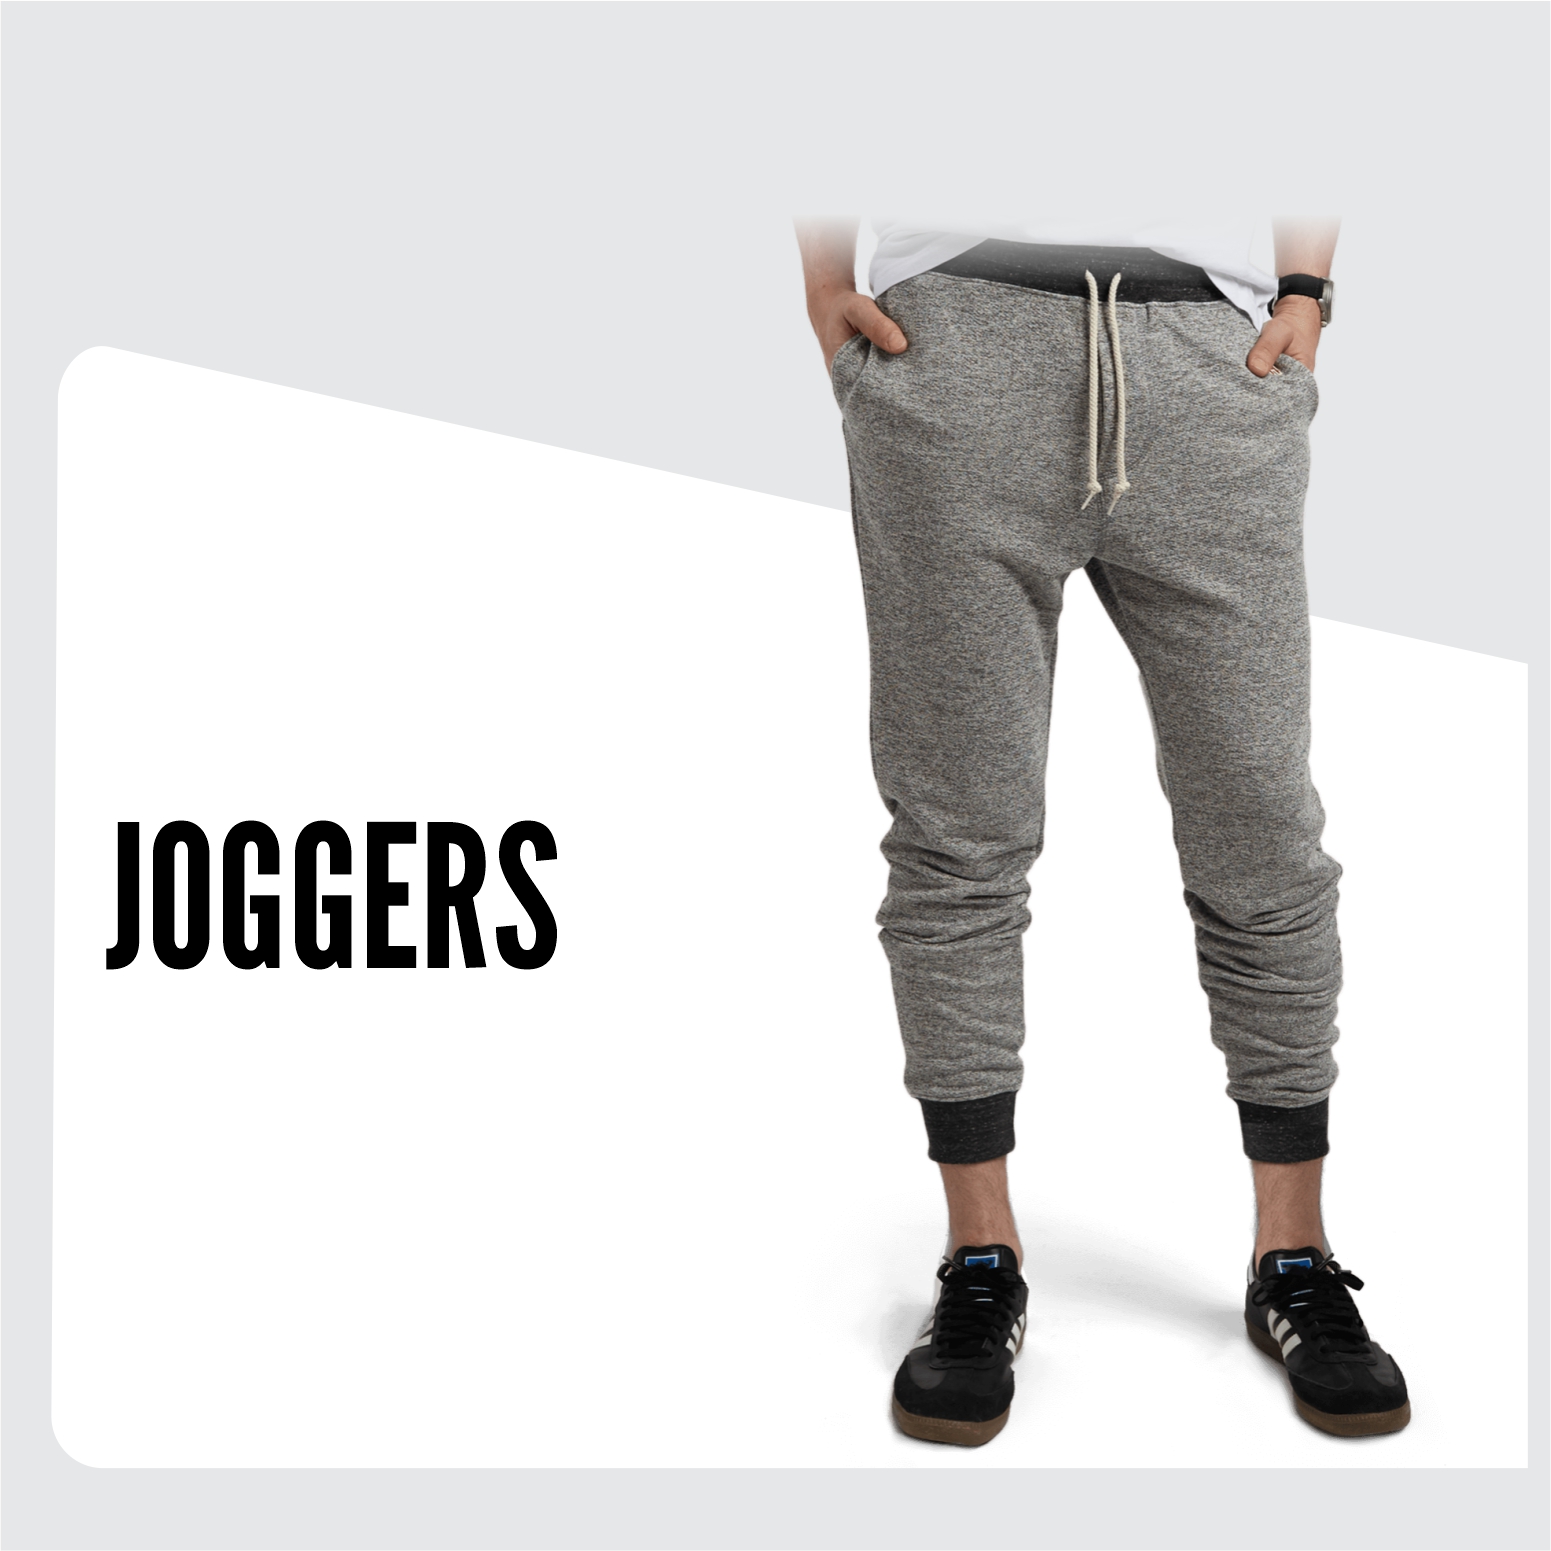 joggers-main-banner